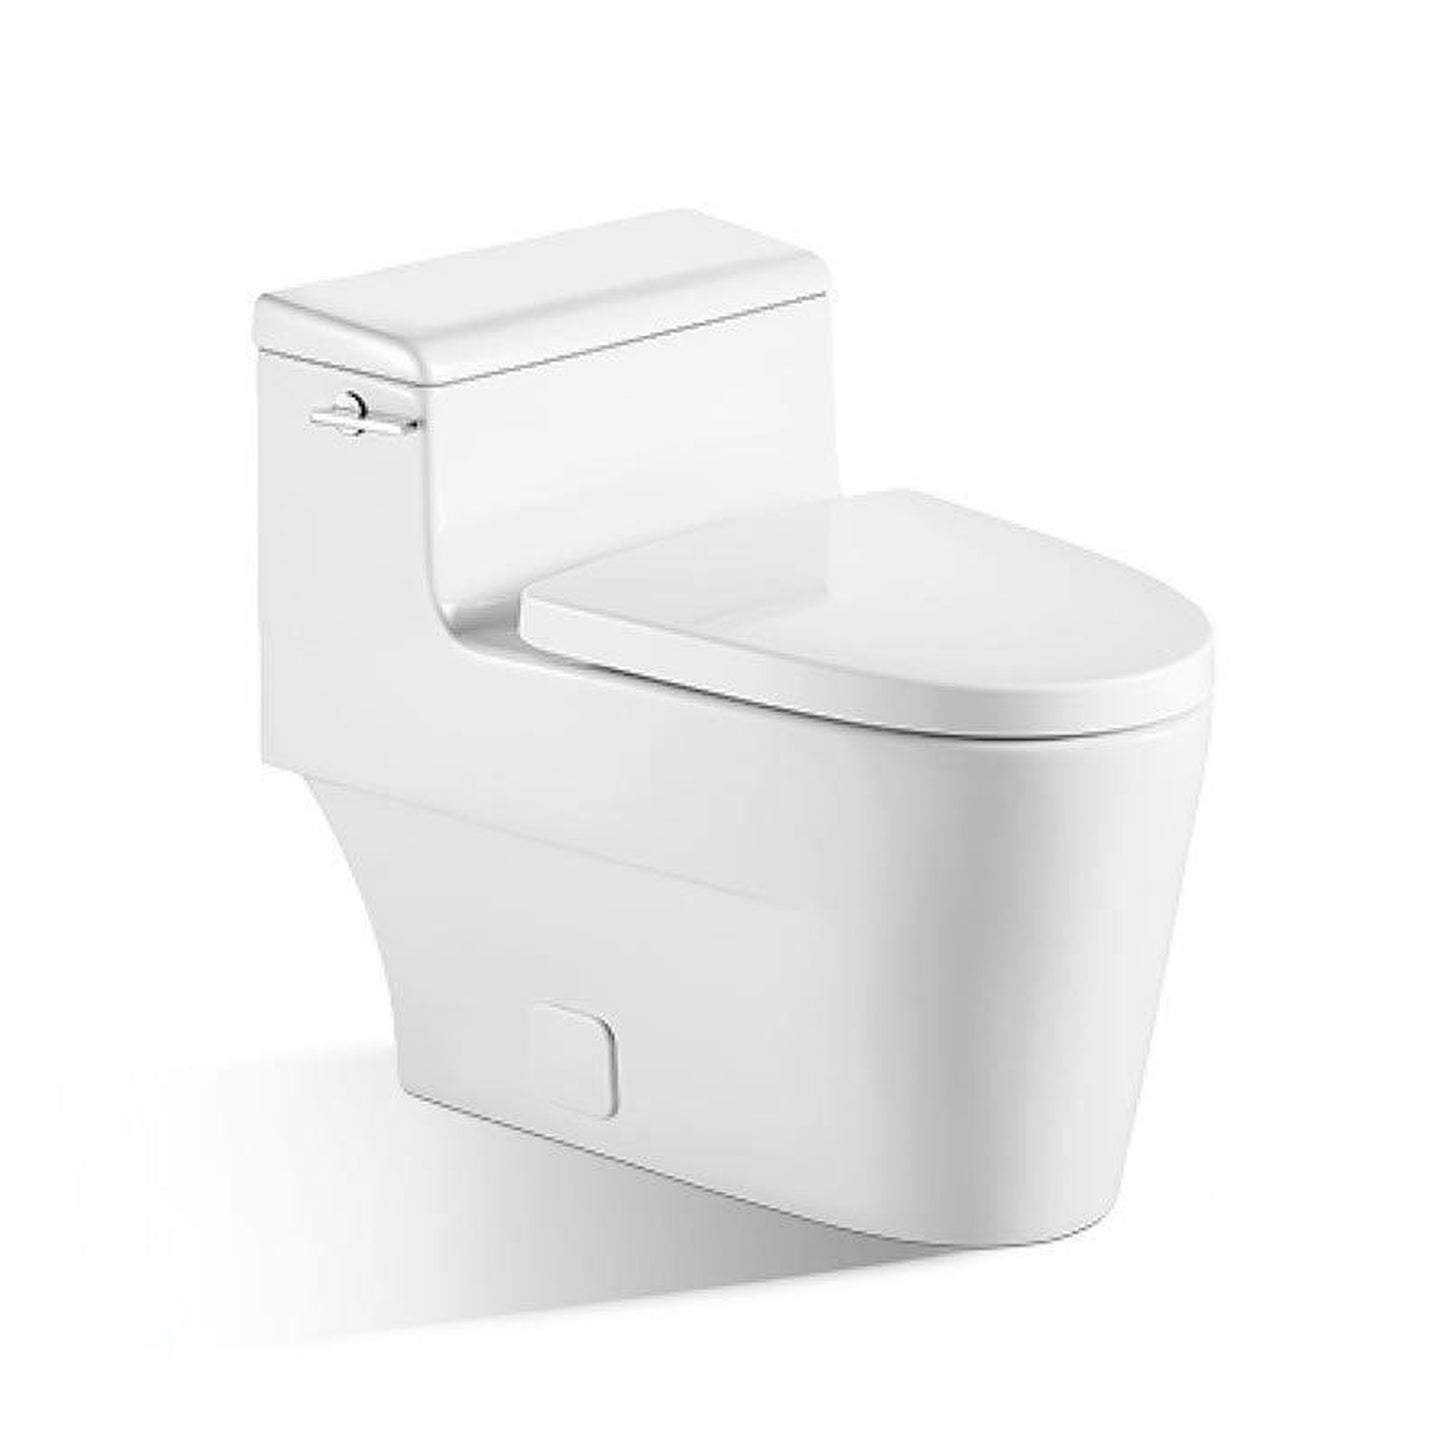 BNK BTO BL-0317 Siphon Flushing Toilet